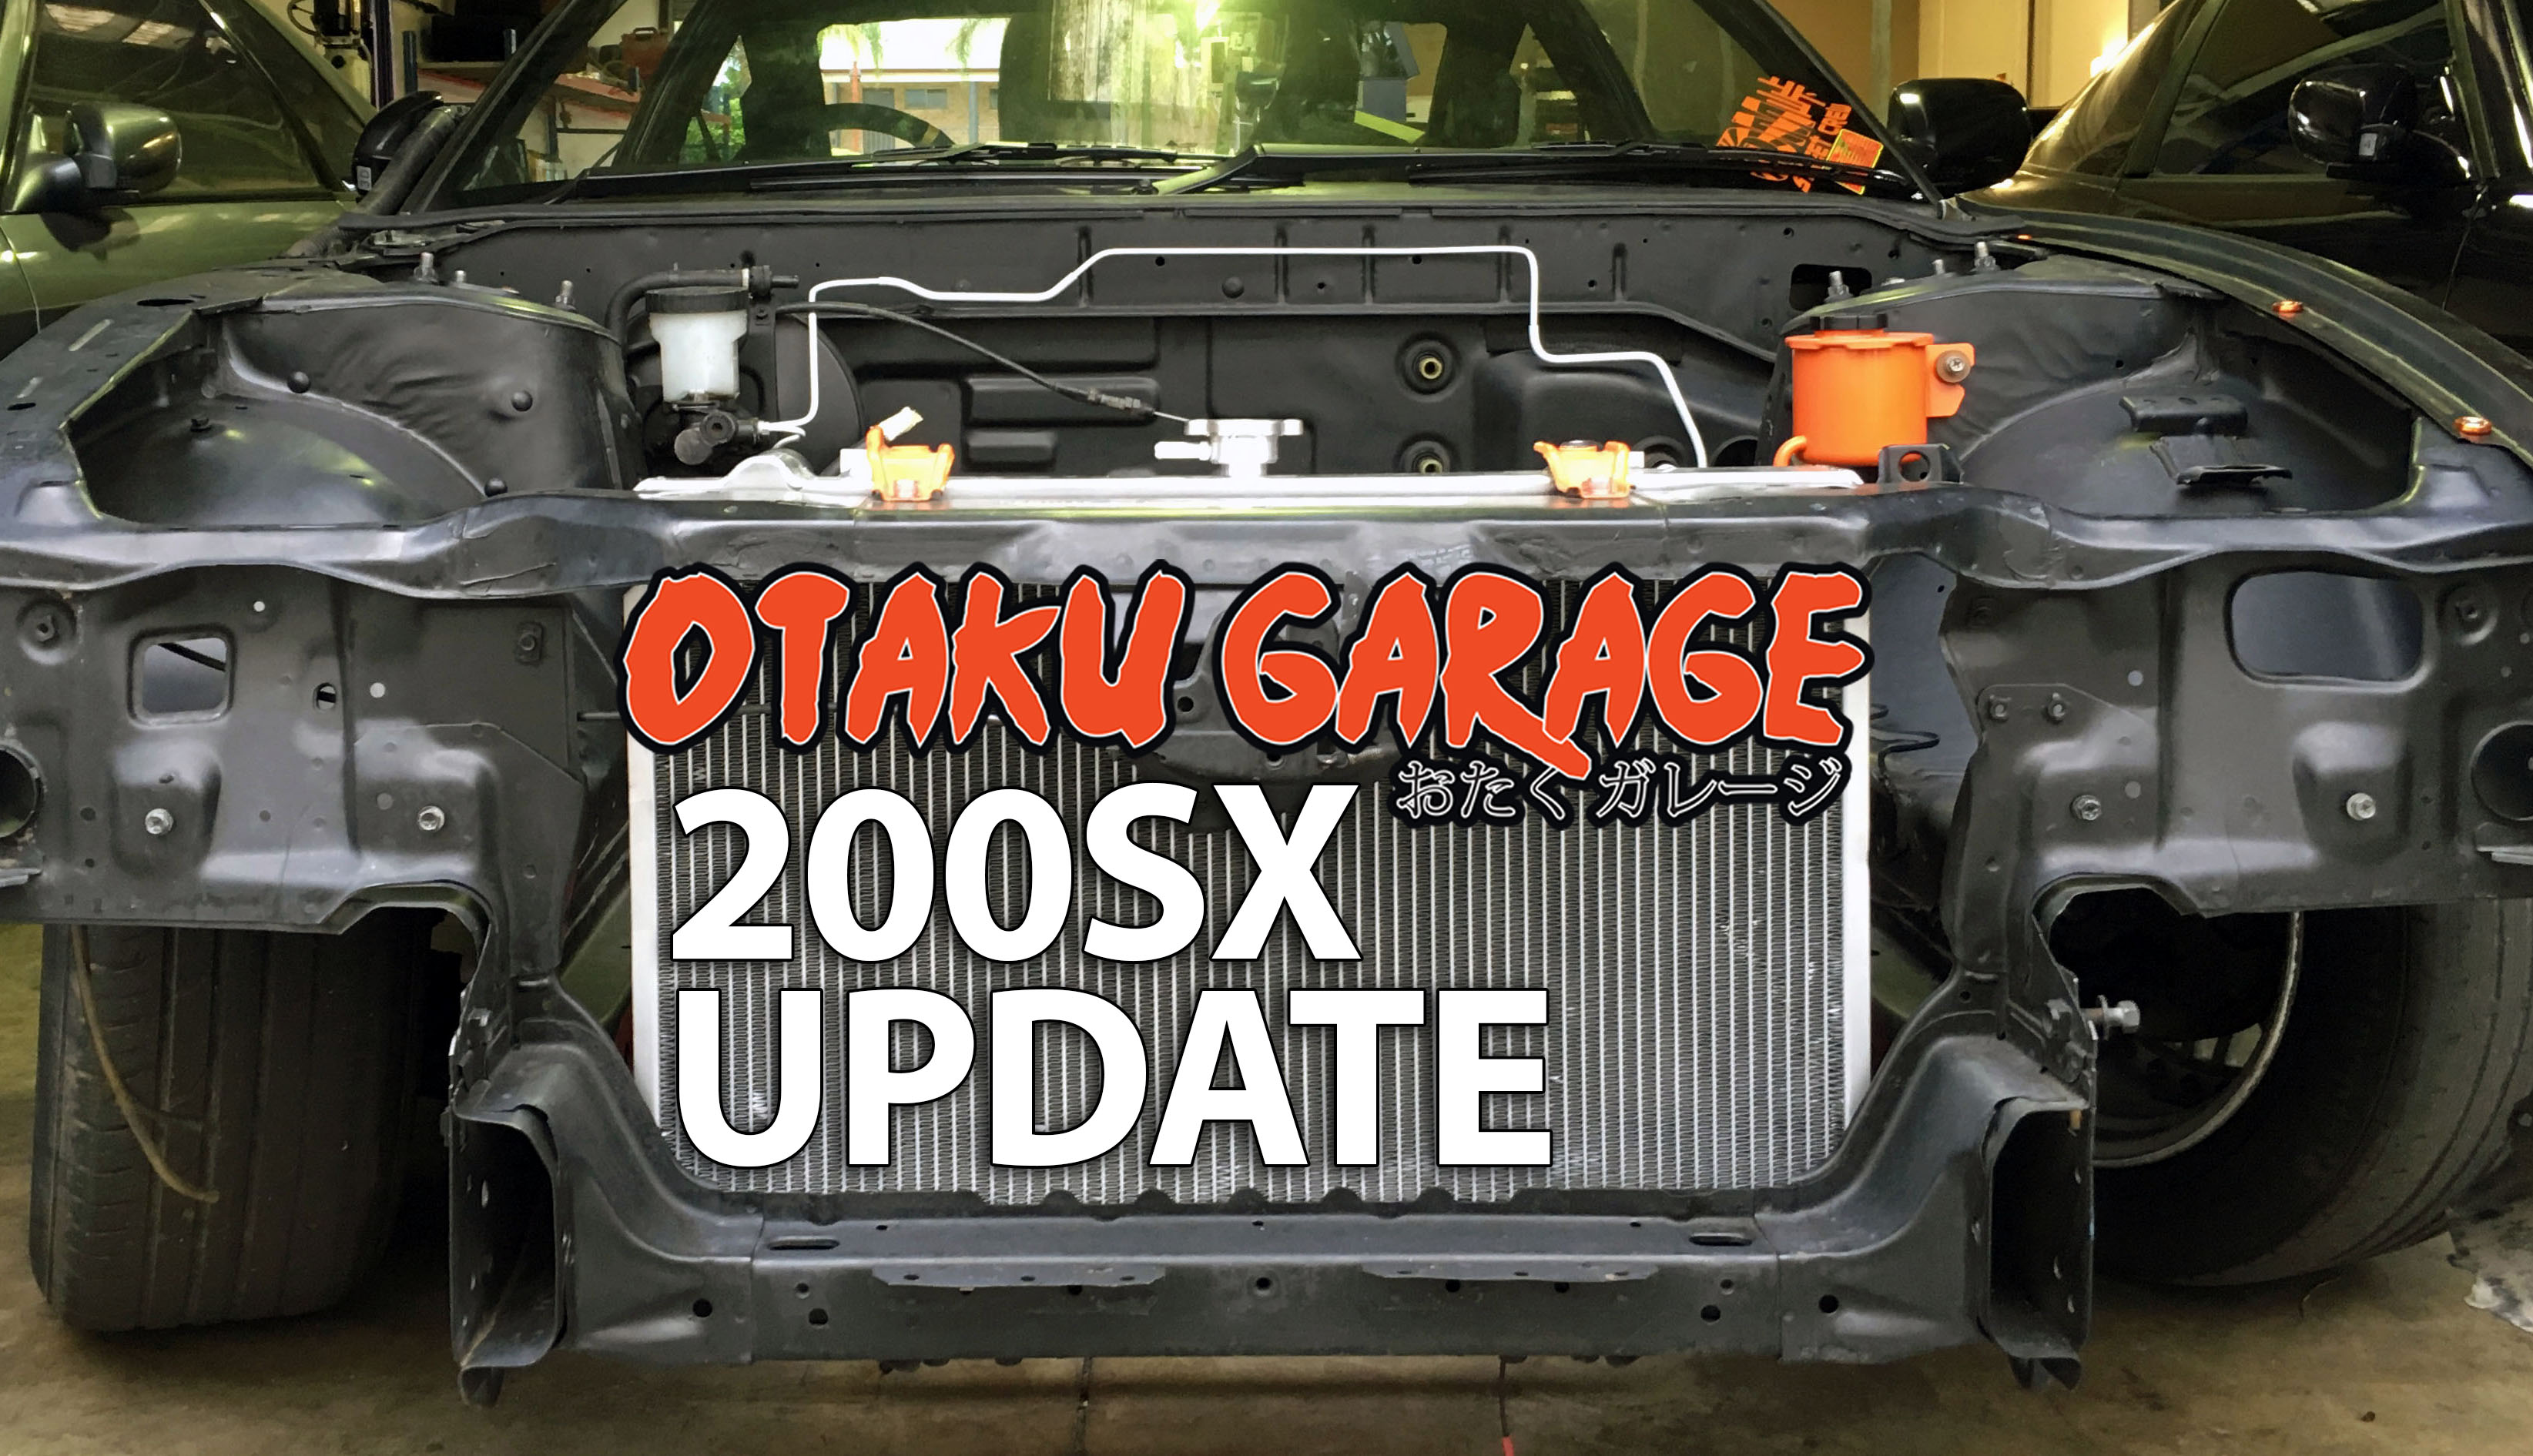 Otaku Garage 200SX Update